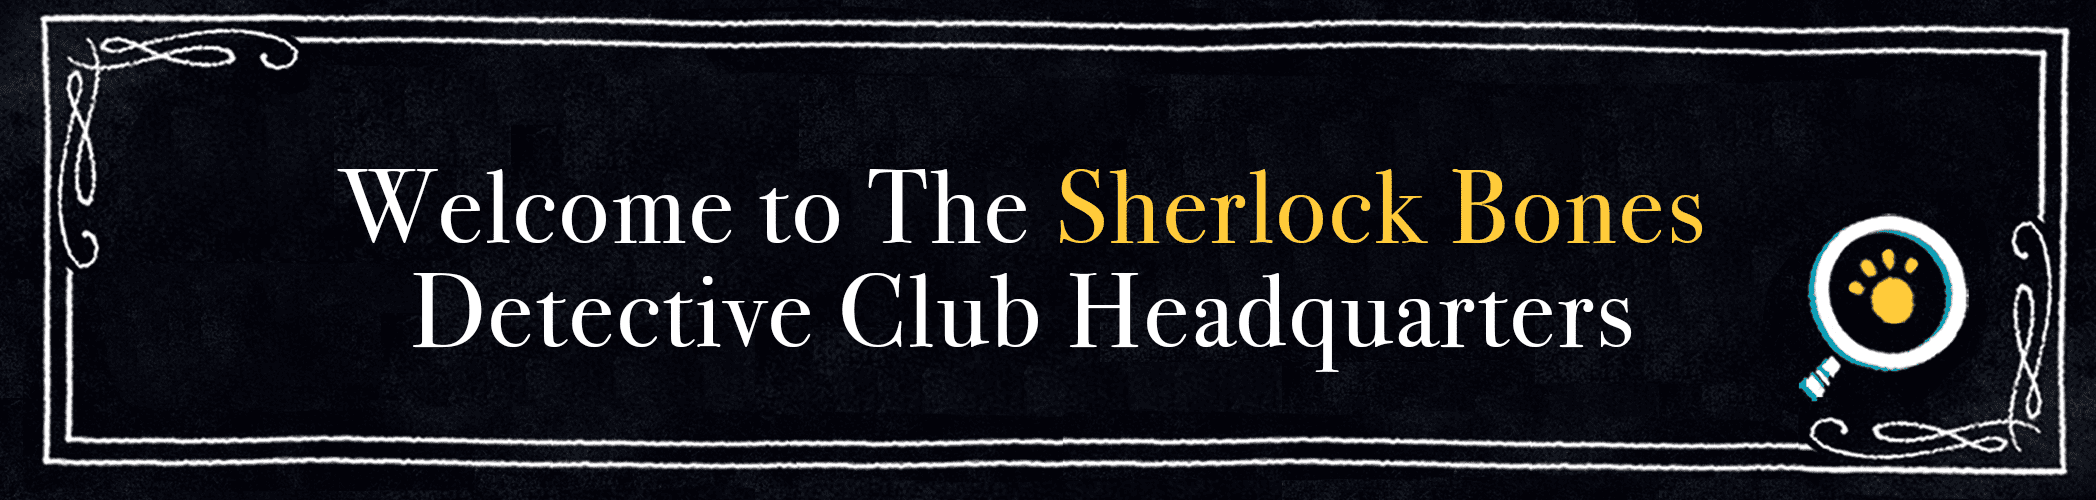 Welcome to the Sherlock Bones Detective Club Head quarters 